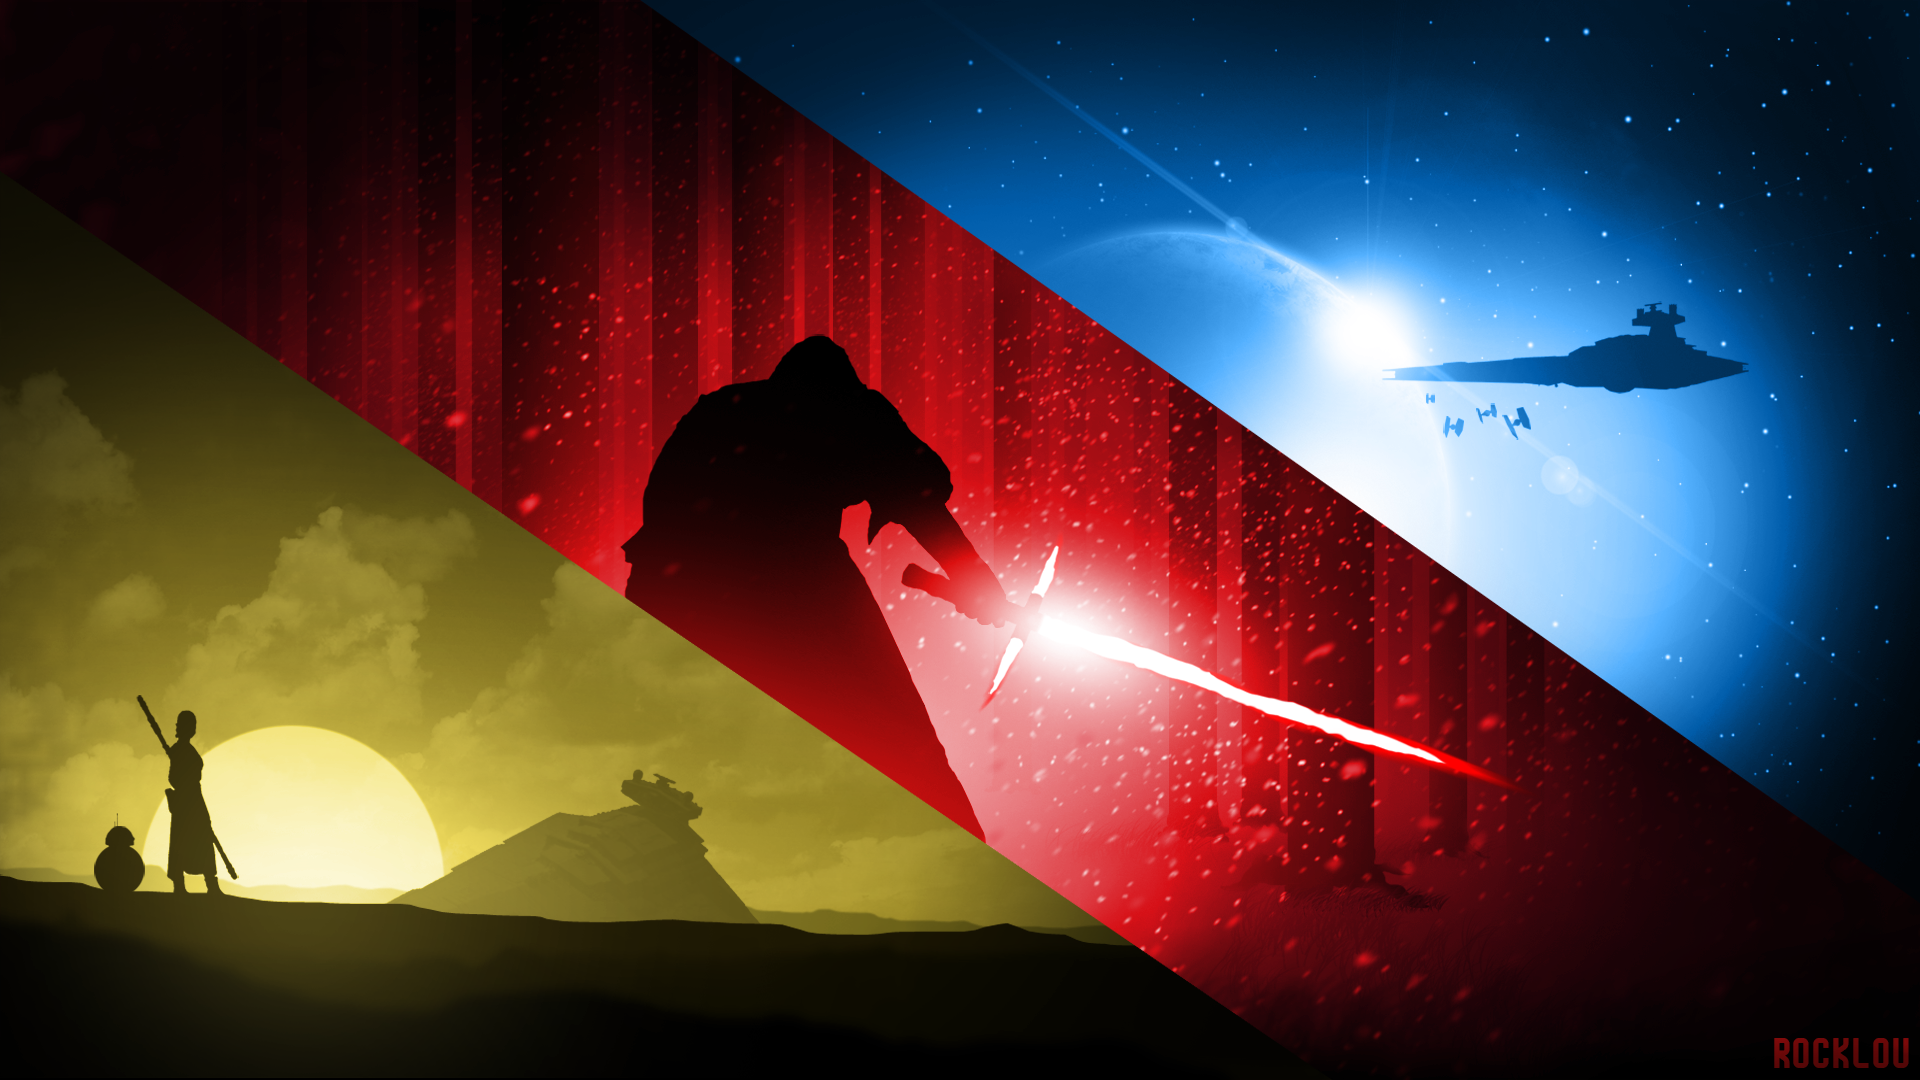 Star Wars: The Force Awakens - Wallpaper (No logo)